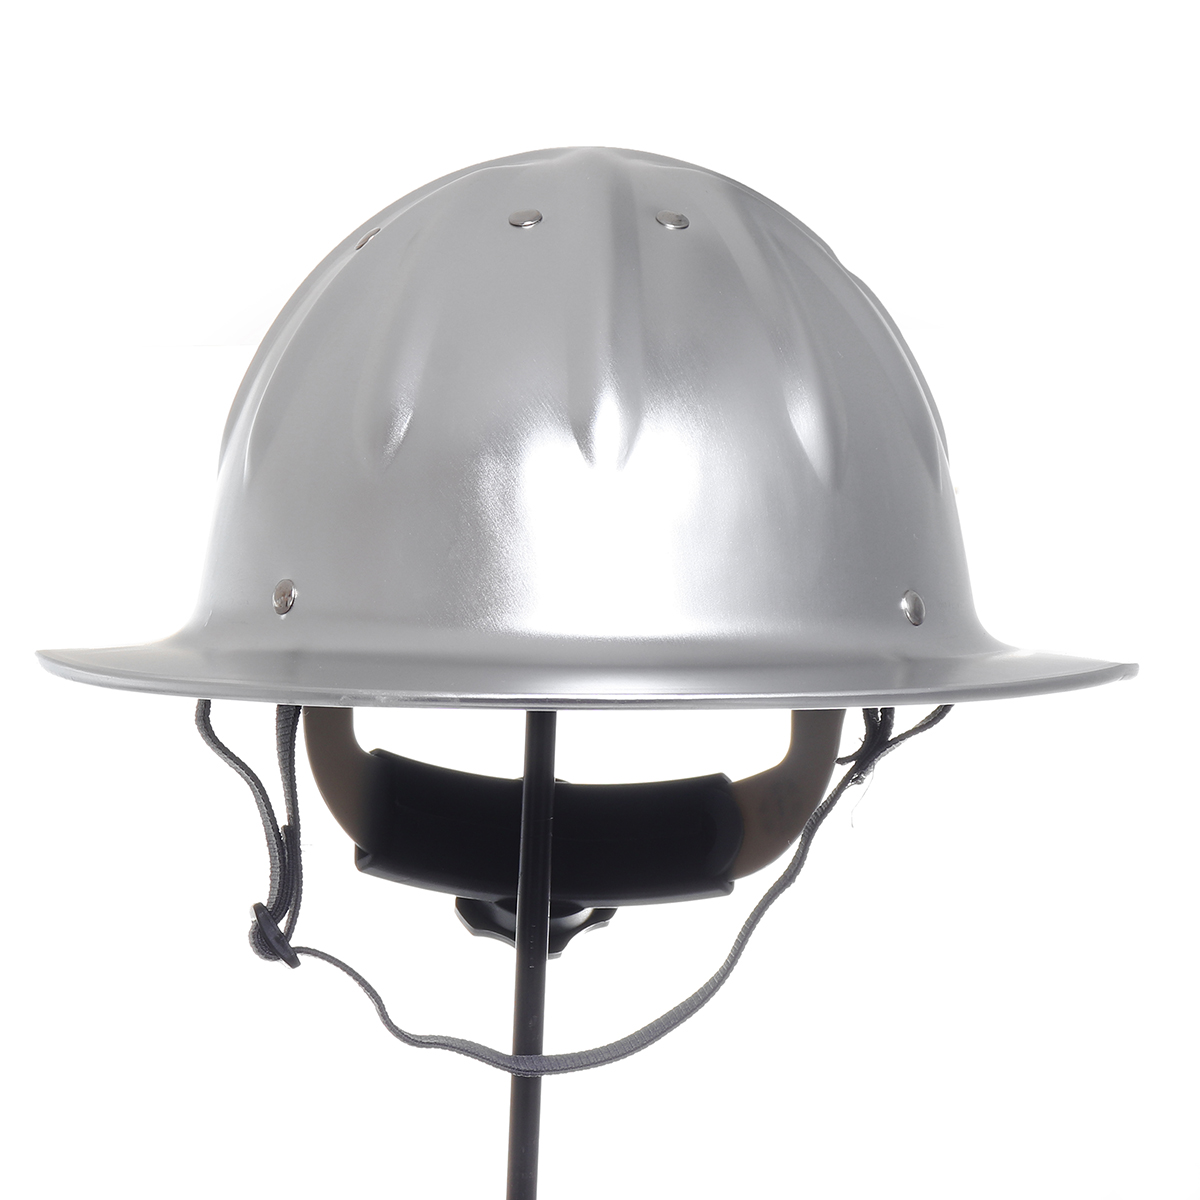 Lightweight High Strength Aluminum Full Brim Hard Hat Safety Helmet For Construction Railway Metallurgy Mine Shipbuilding